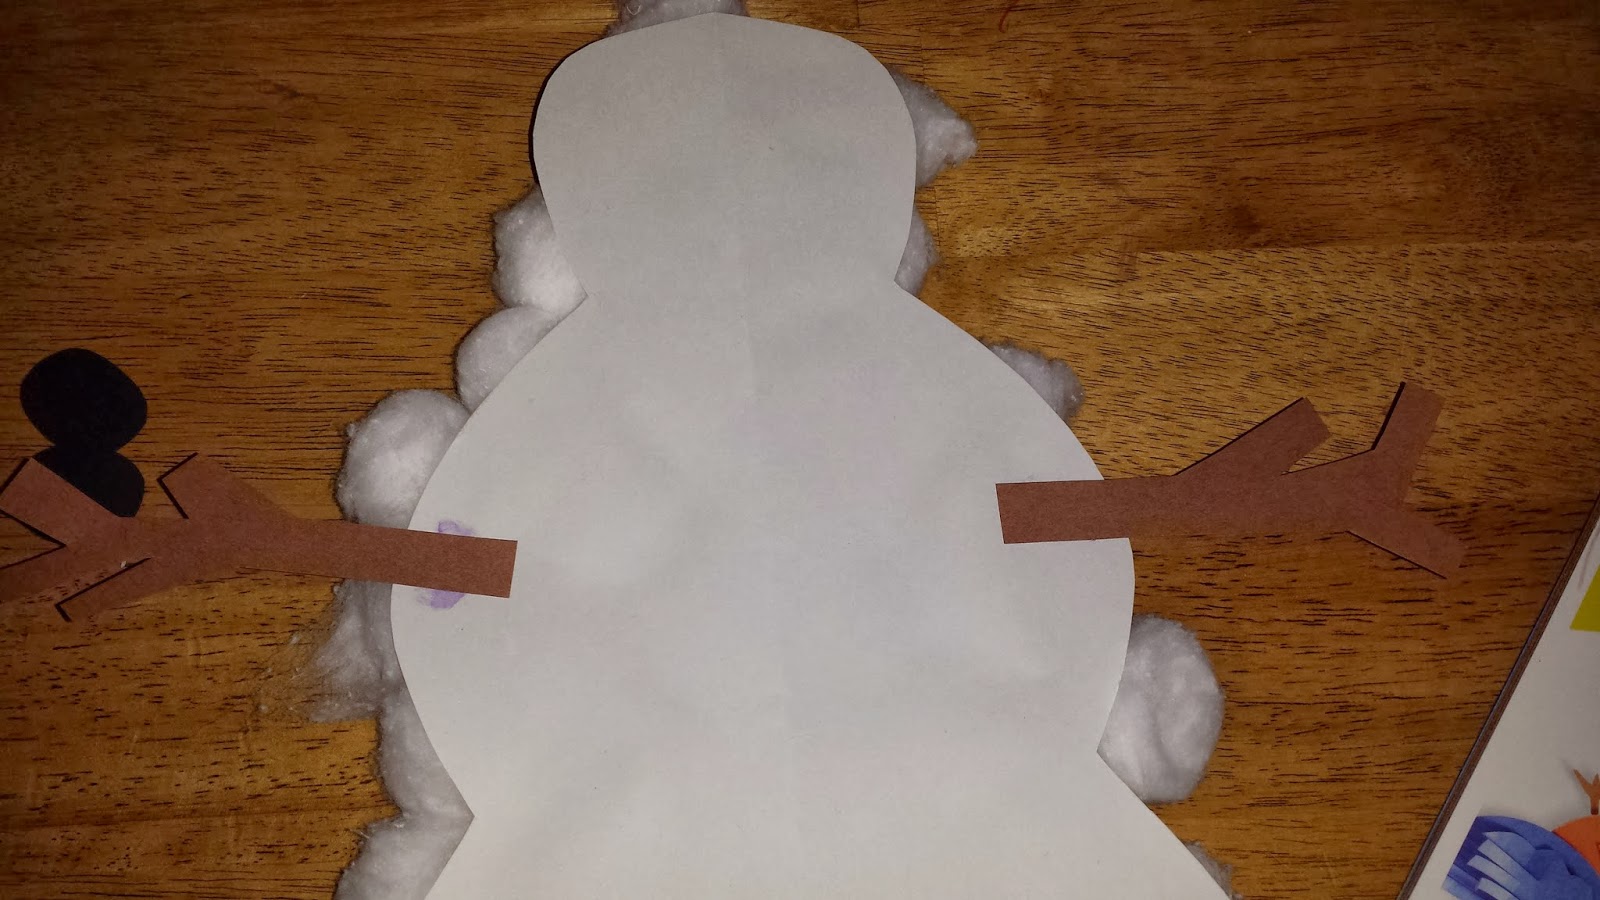 Munchkin and Bean: Simple Snowman Craft